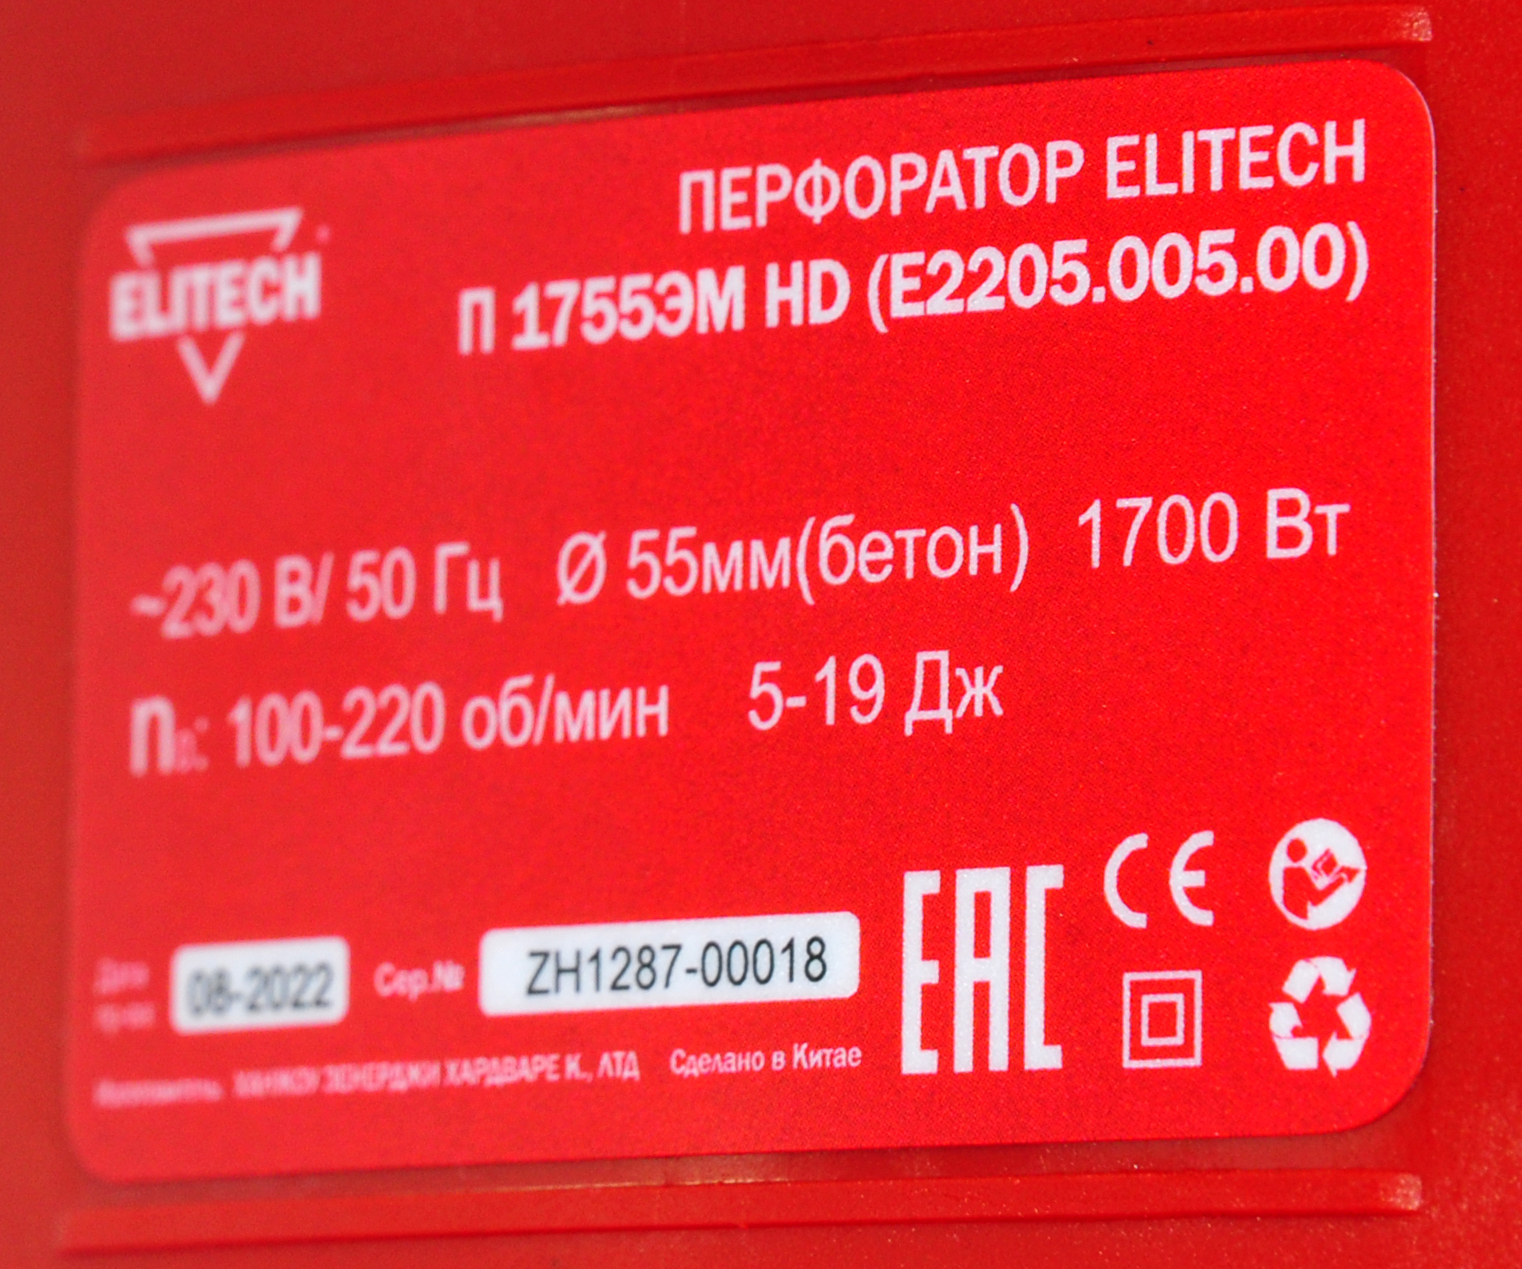 Перфоратор Elitech П 1755ЭМ HD (E2205.005.00)